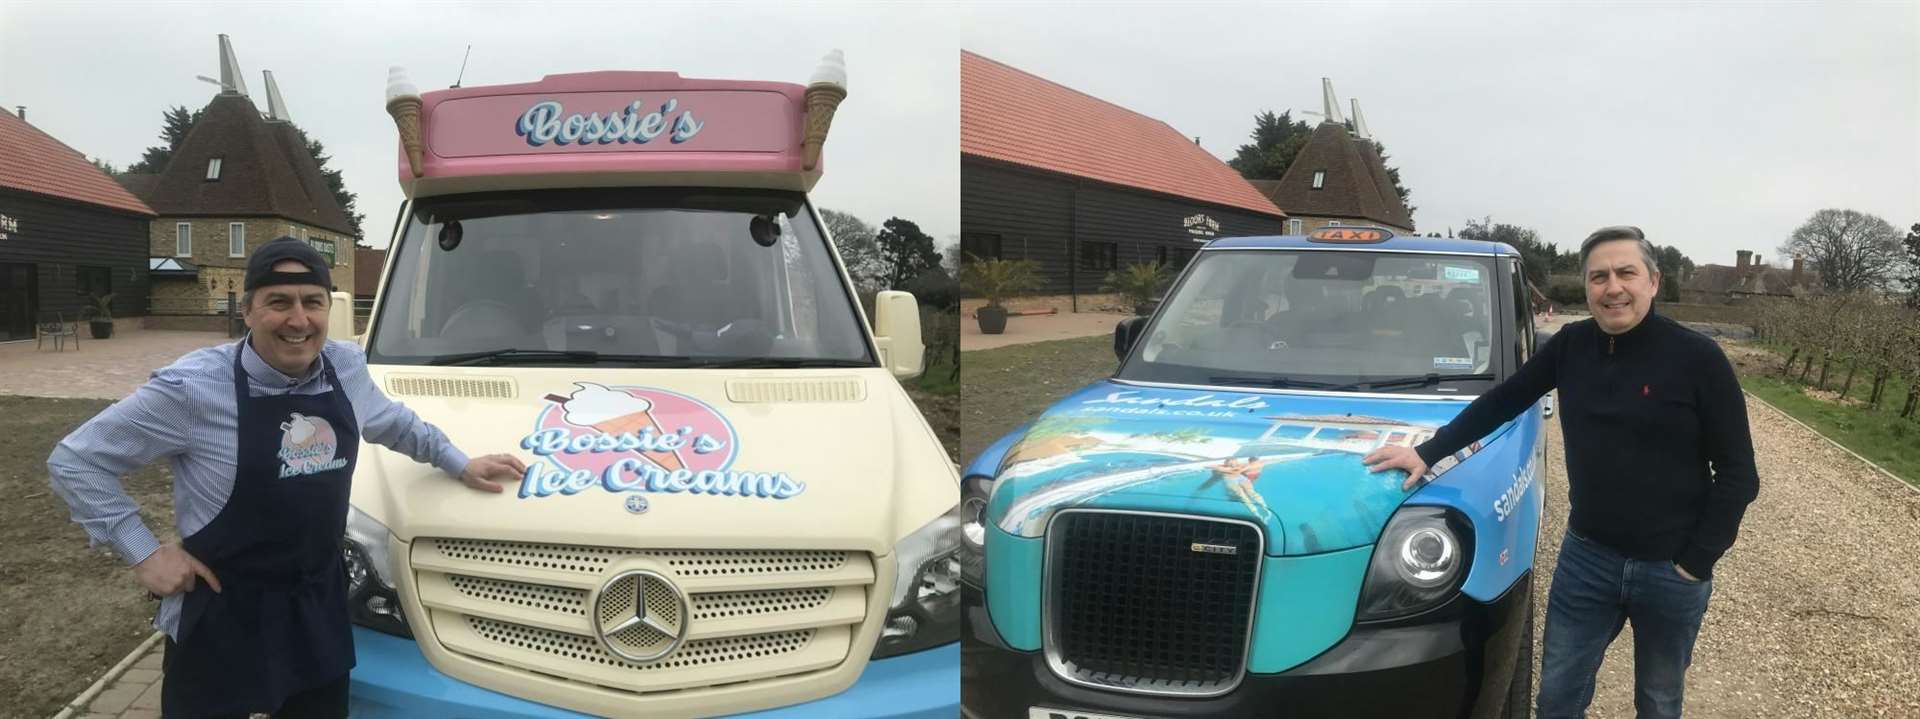 Taxi driver Steve Hawkins now also runs an ice cream business